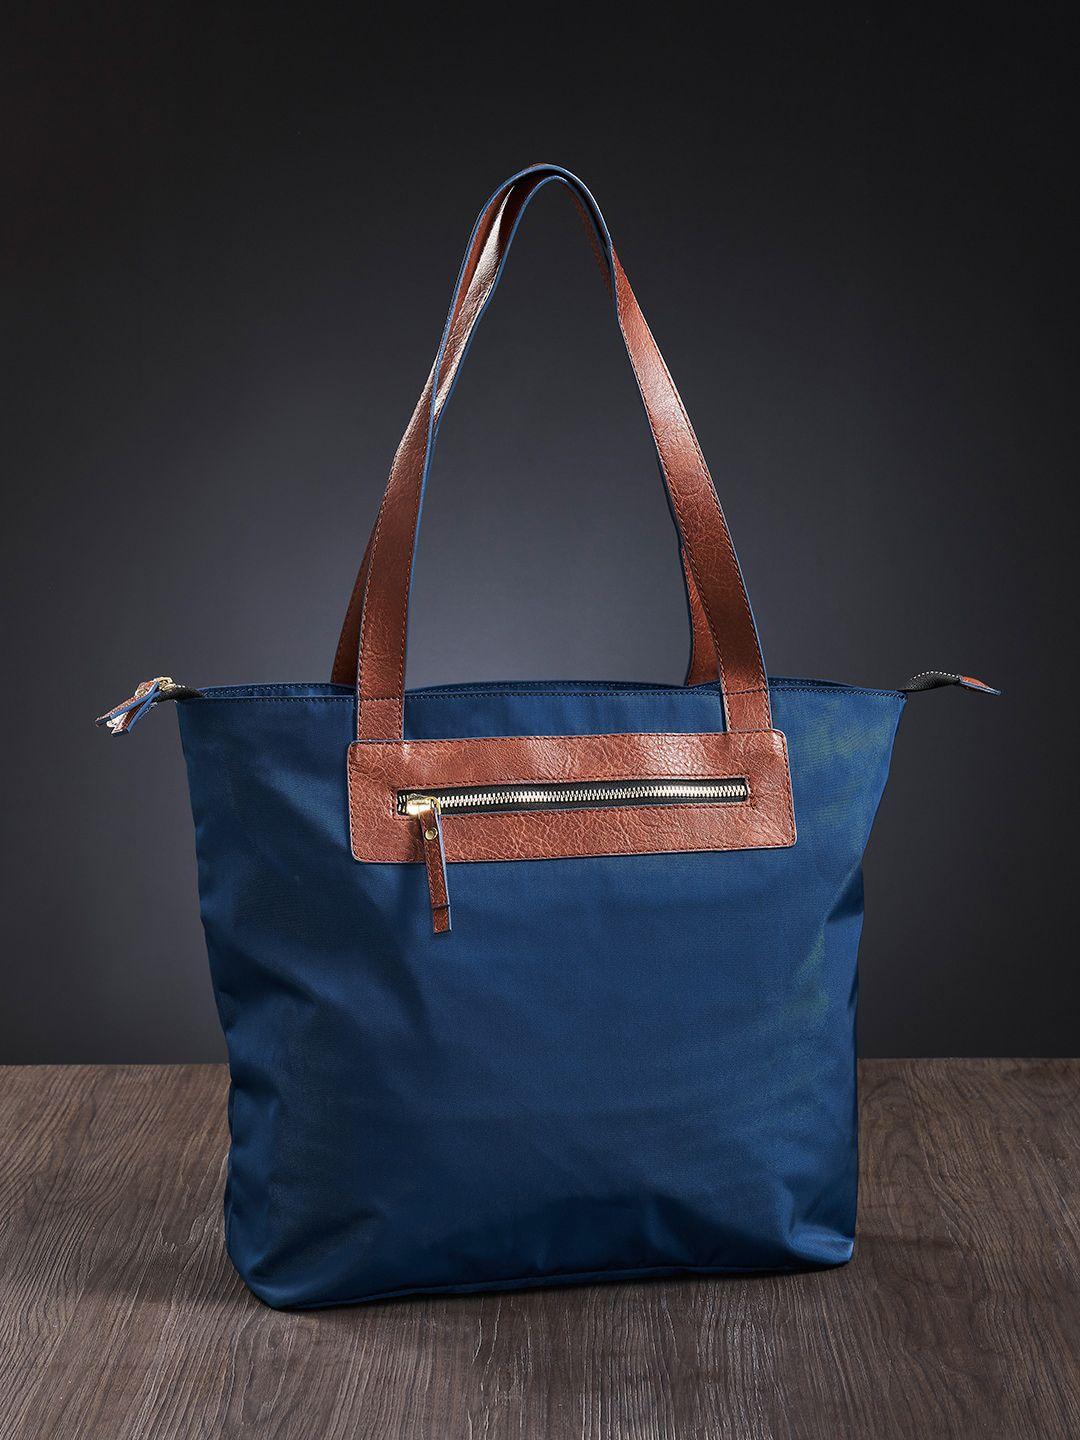 mona b navy blue set of 2 handbag